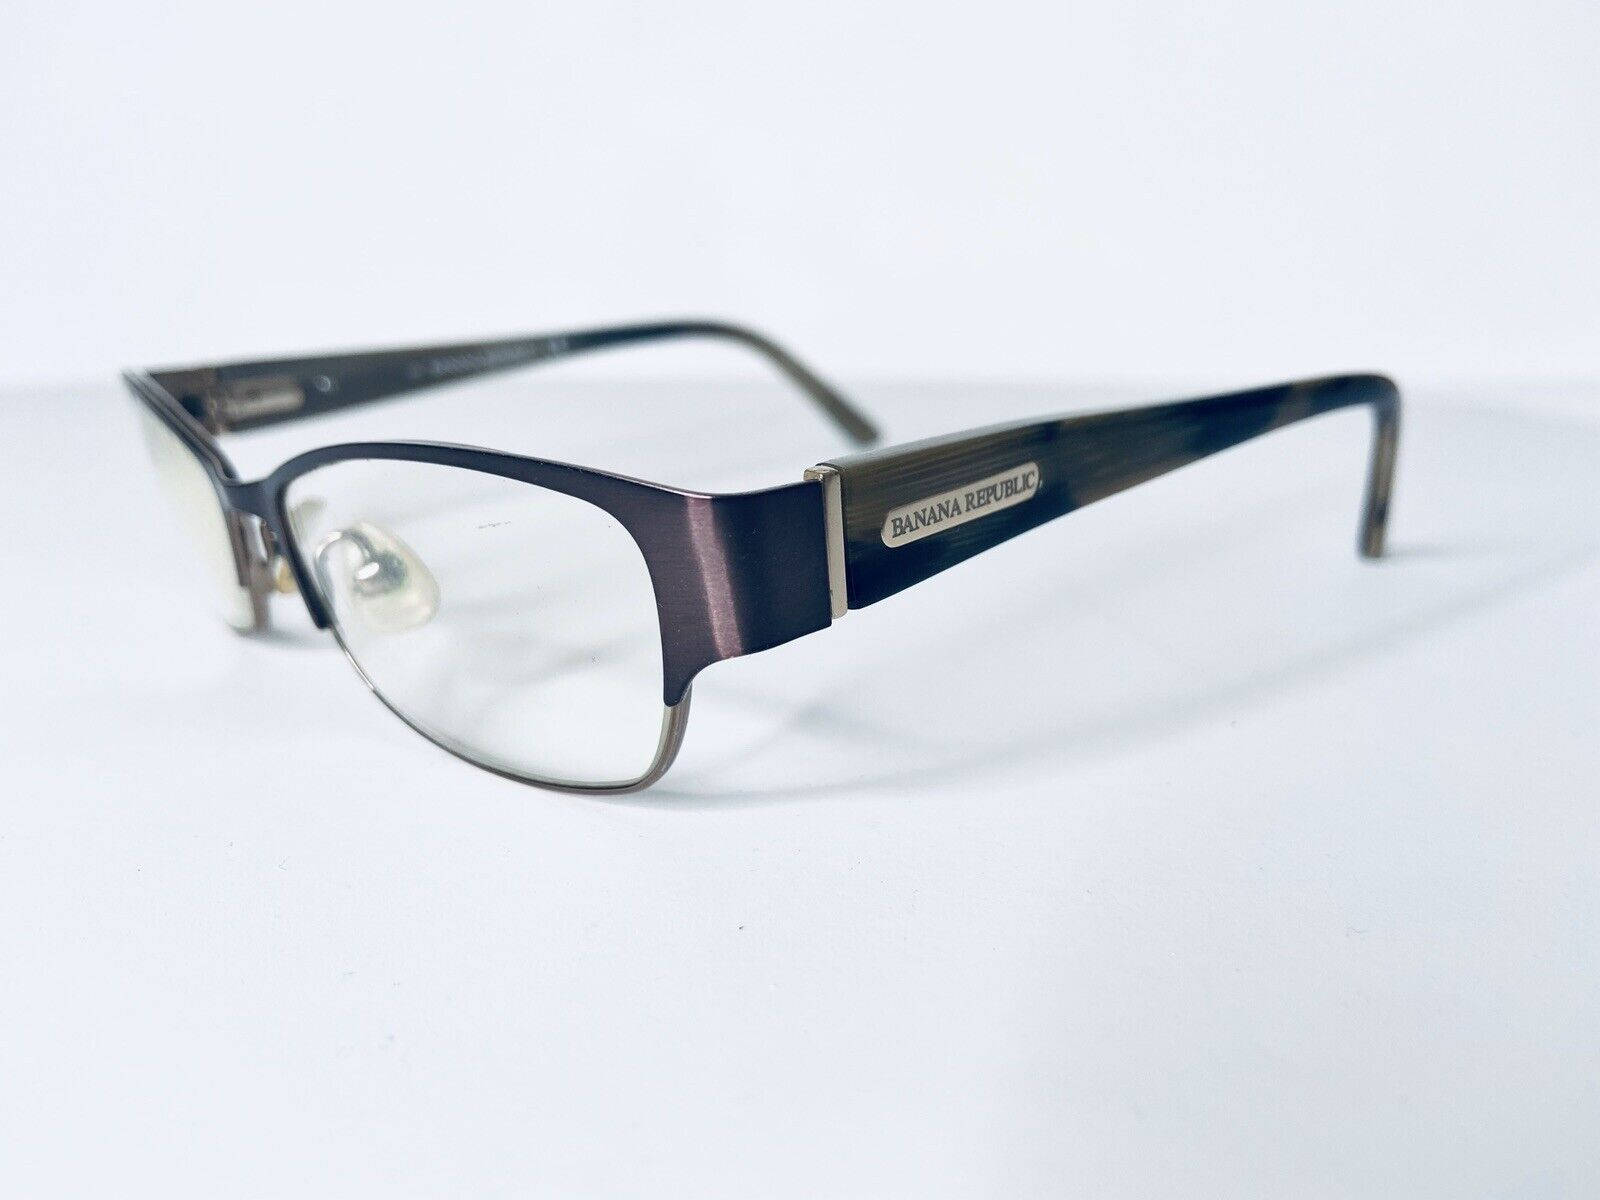 Bananarepublic Jadyn 023b Frame Eyeglasses = Banana Republic Jadyn 023b Ram Glasögon Wallpaper